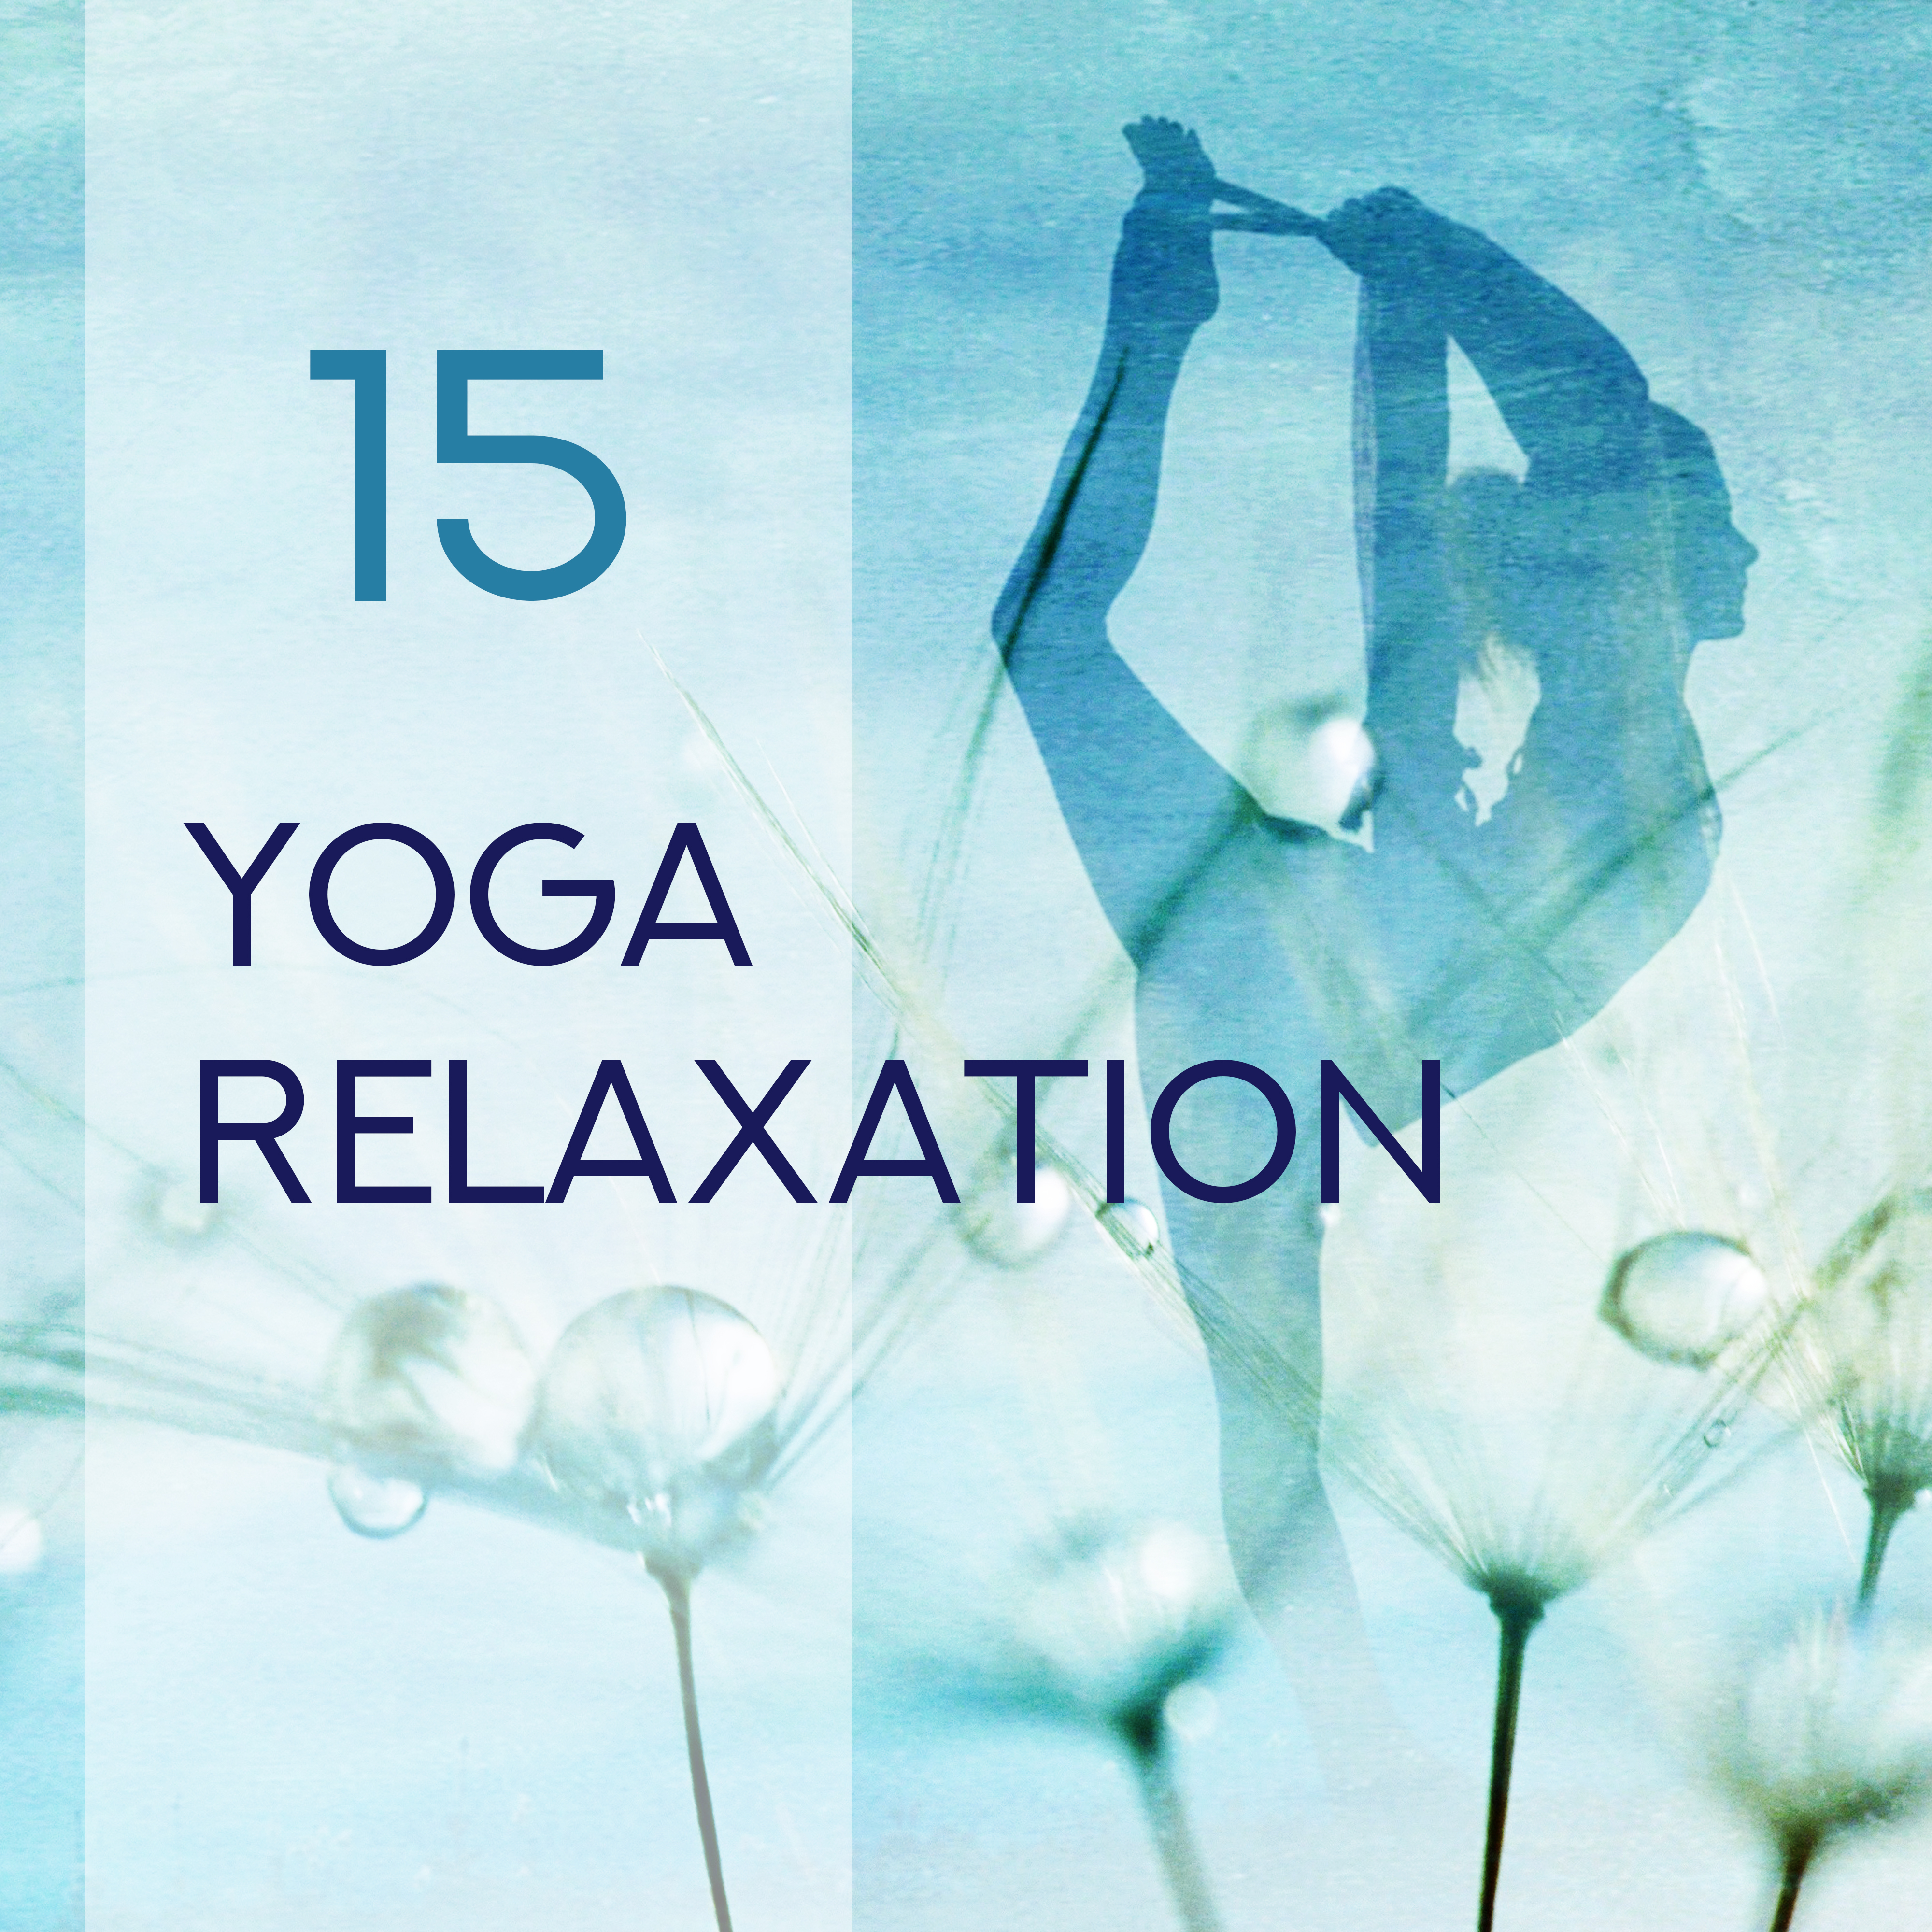 15 Yoga Relaxation